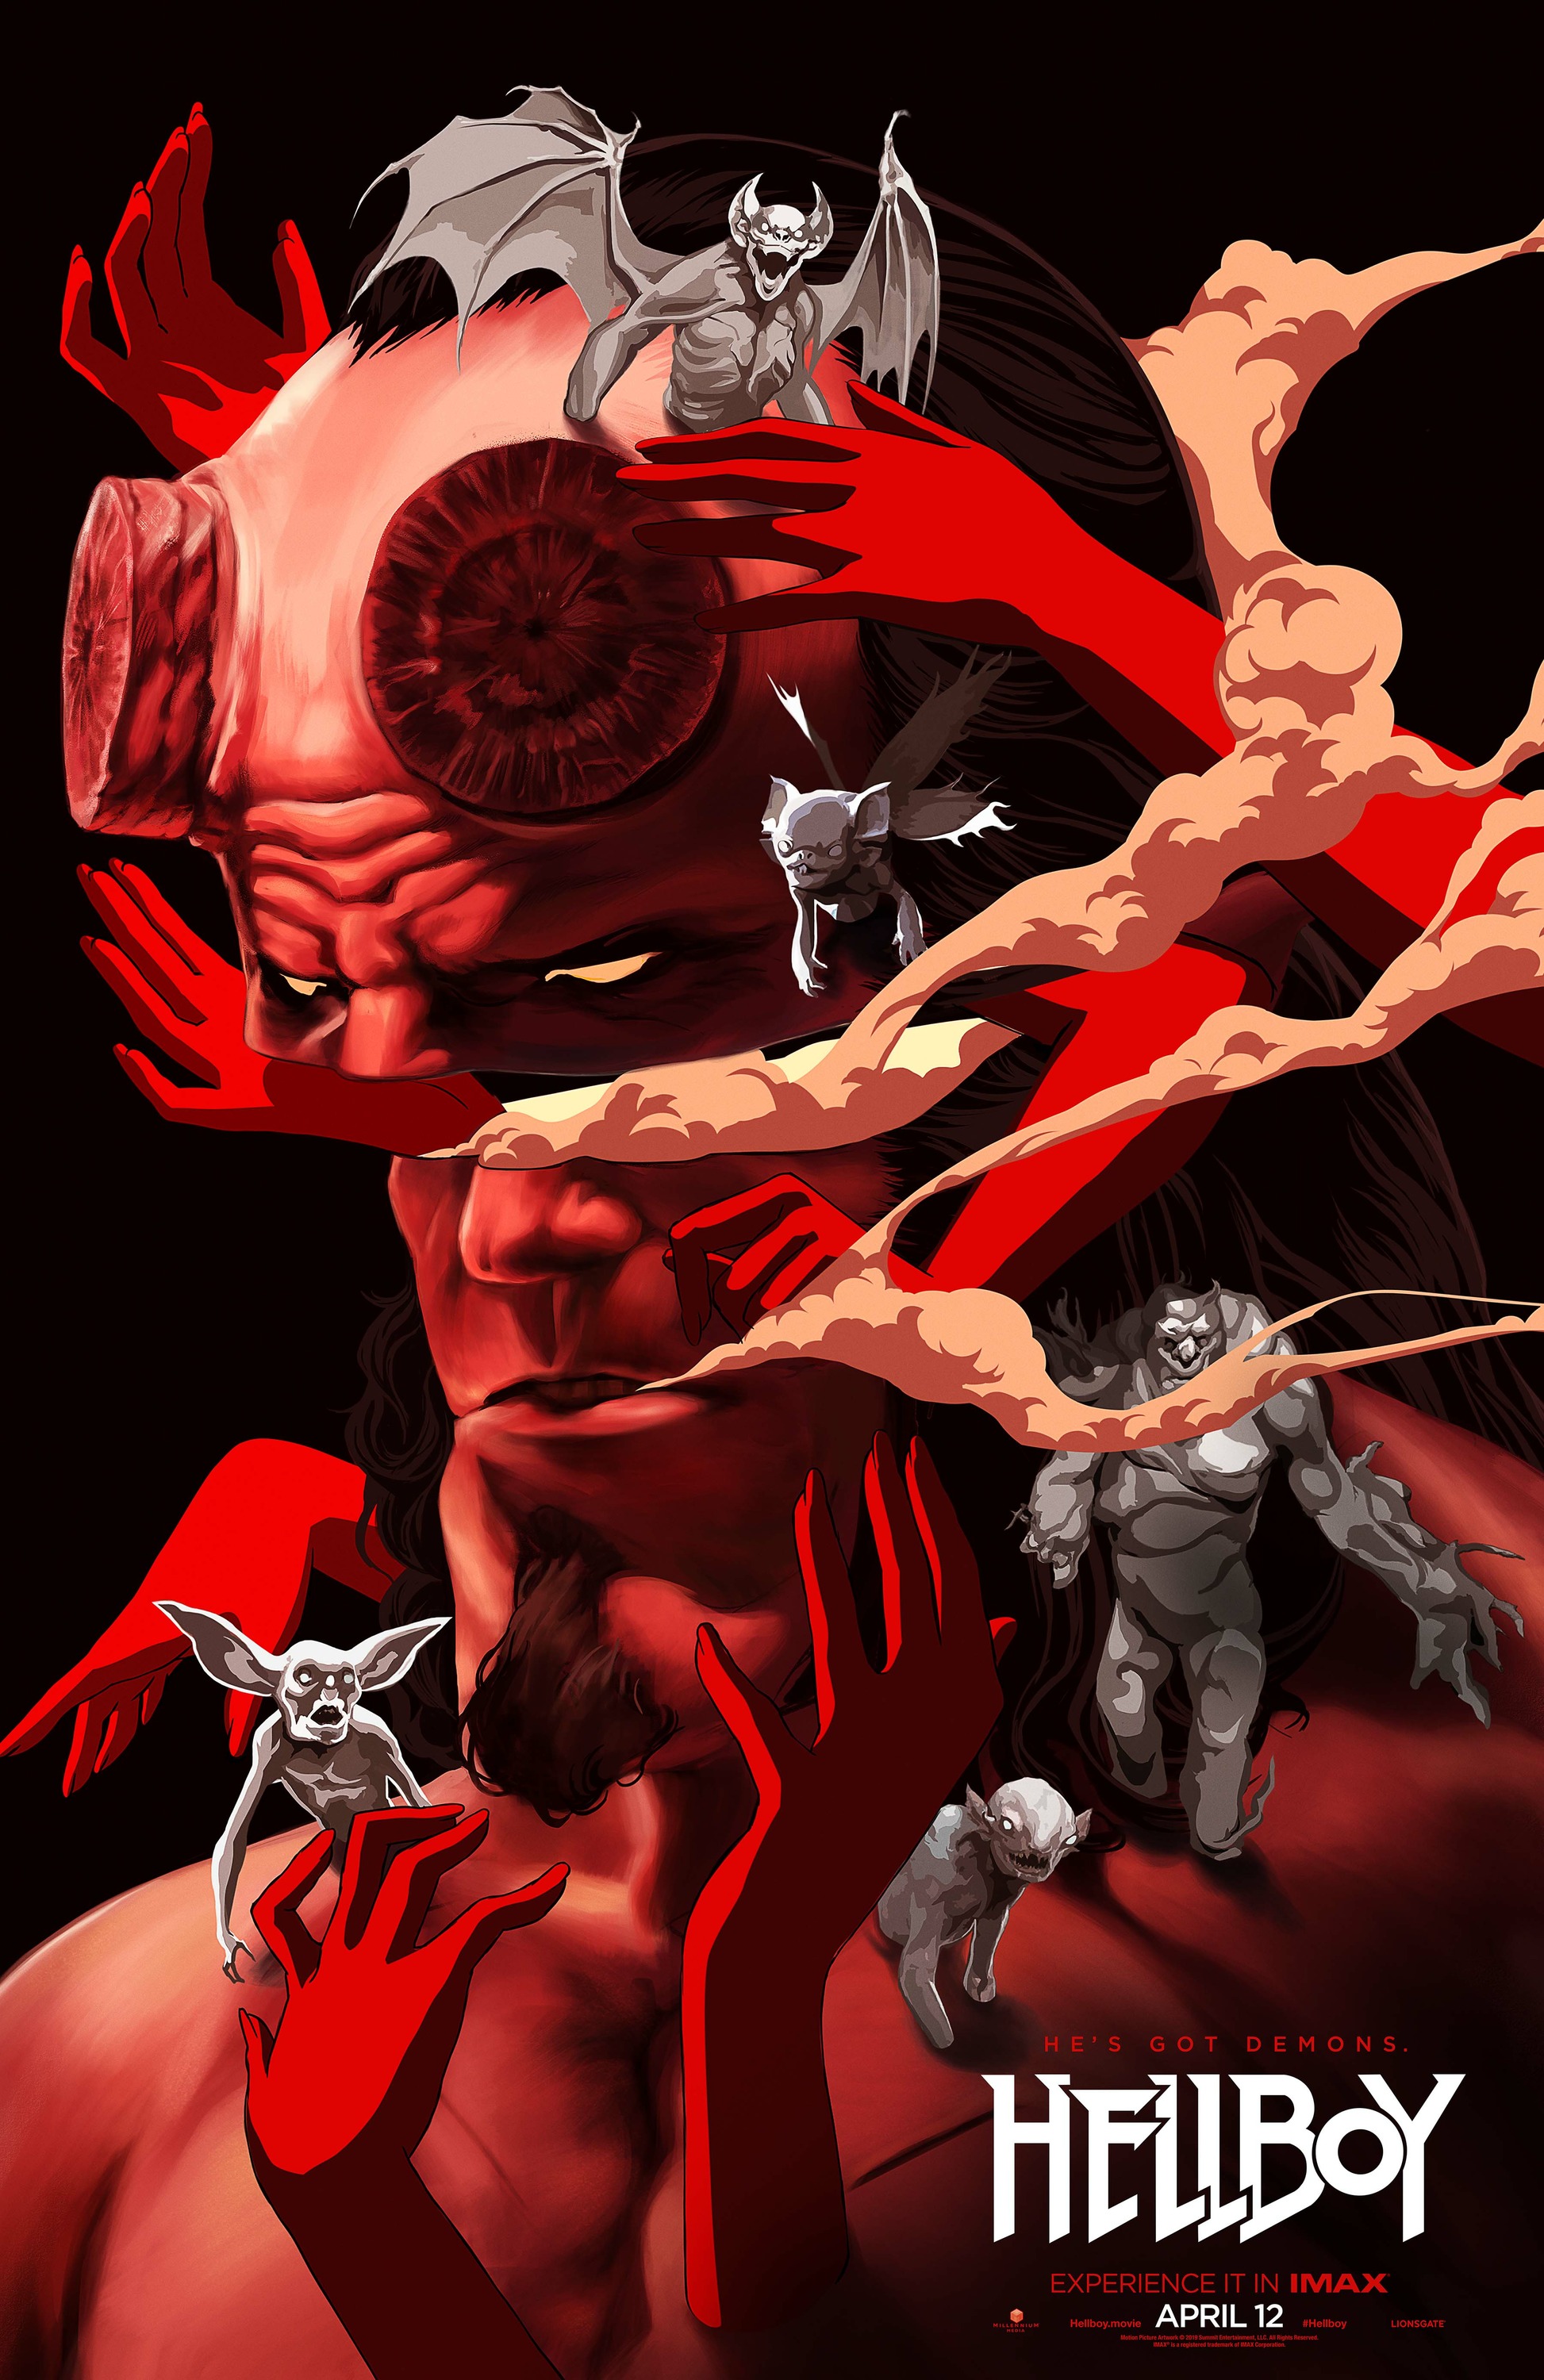 Mega Sized Movie Poster Image for Hellboy (#8 of 26)